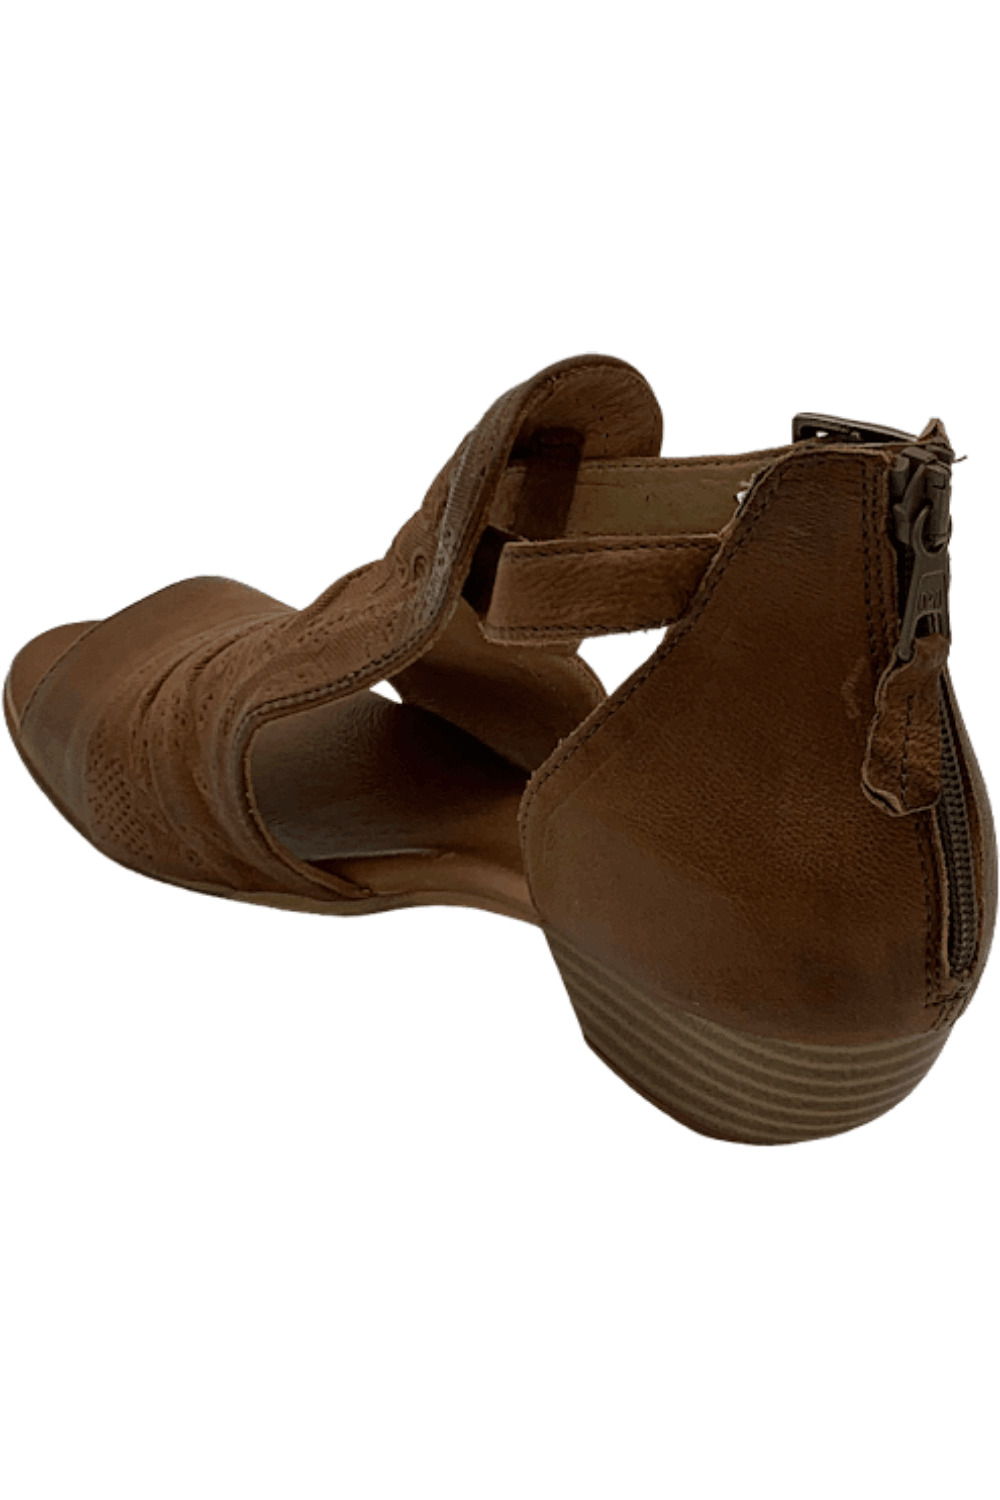 Miz Mooz Leather Heeled Sandals Corra Brandy - image 3